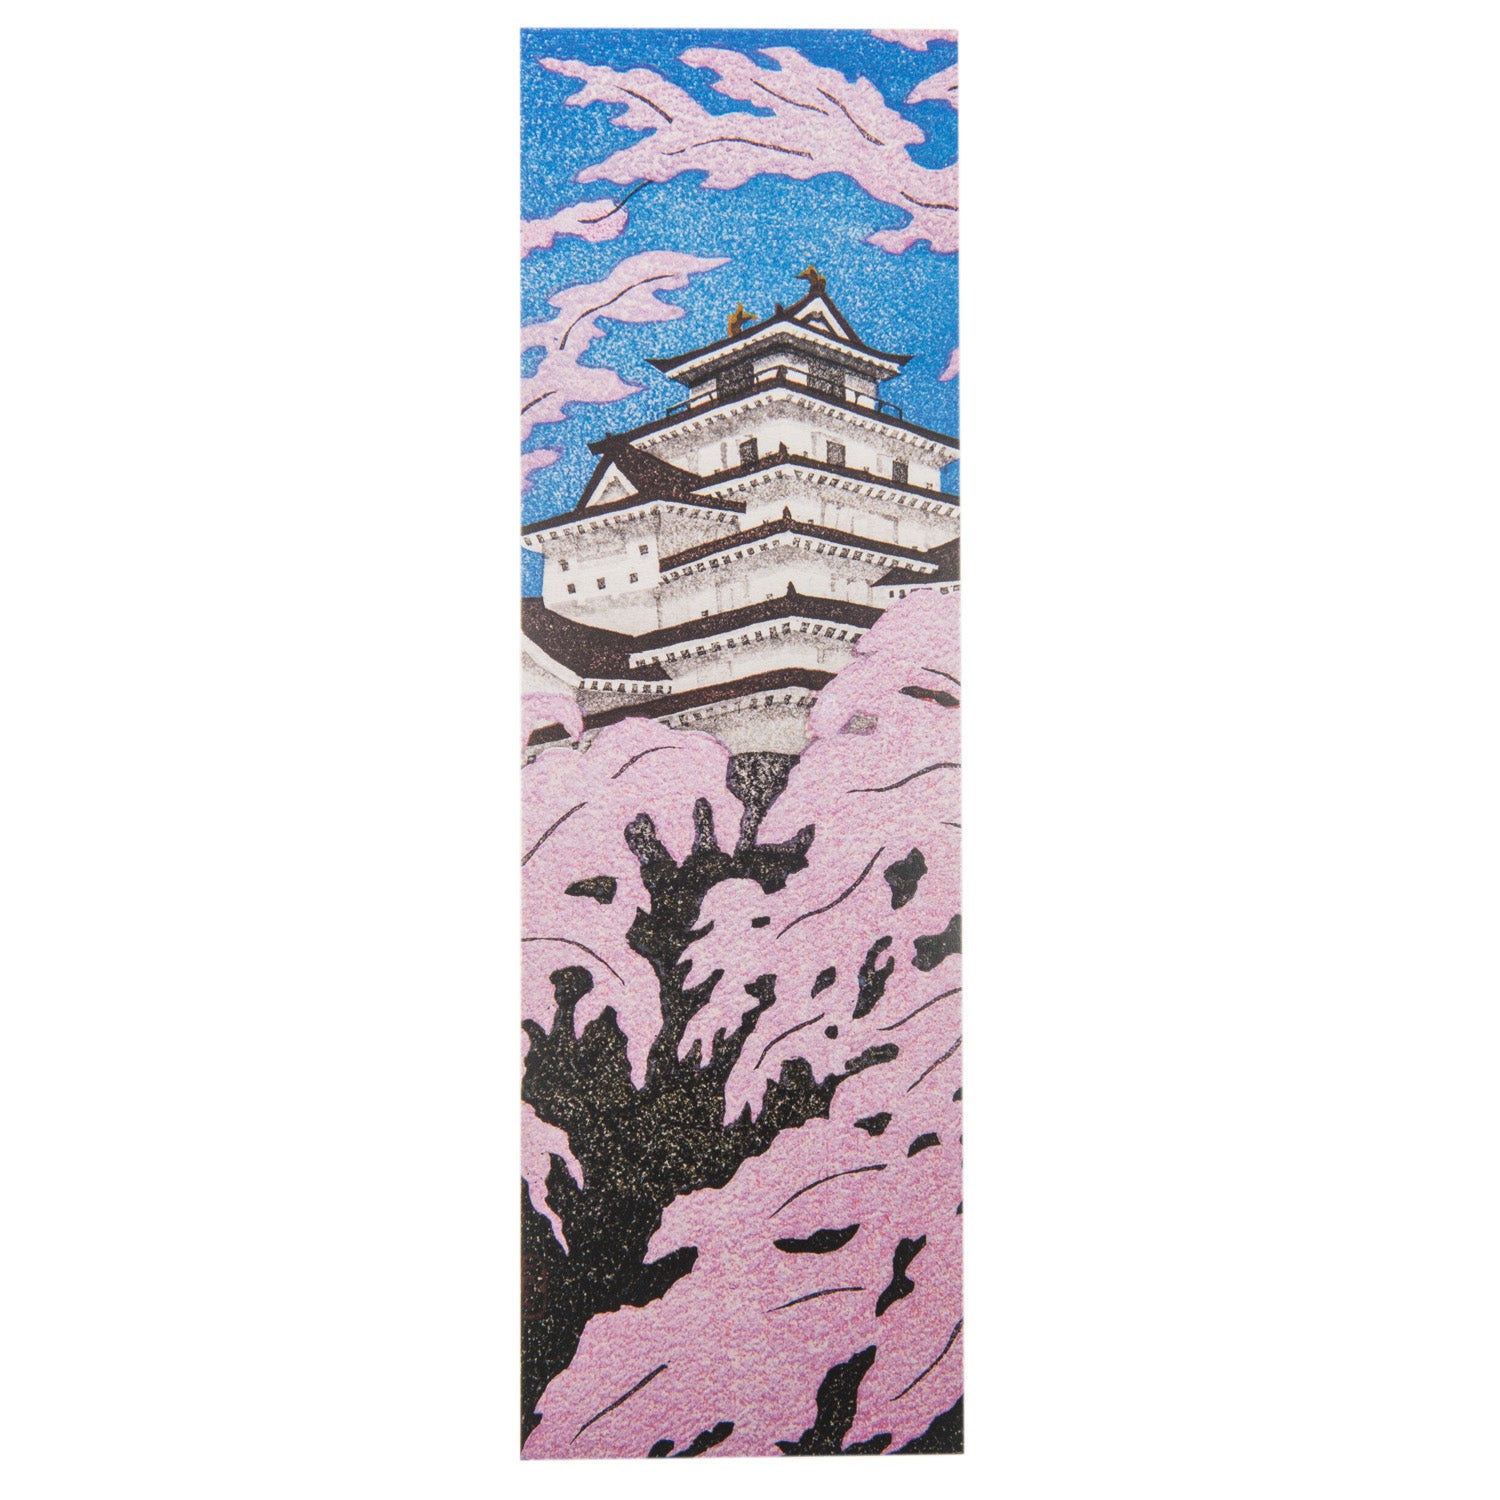 Tsuruga Castle Japanese Bookmark